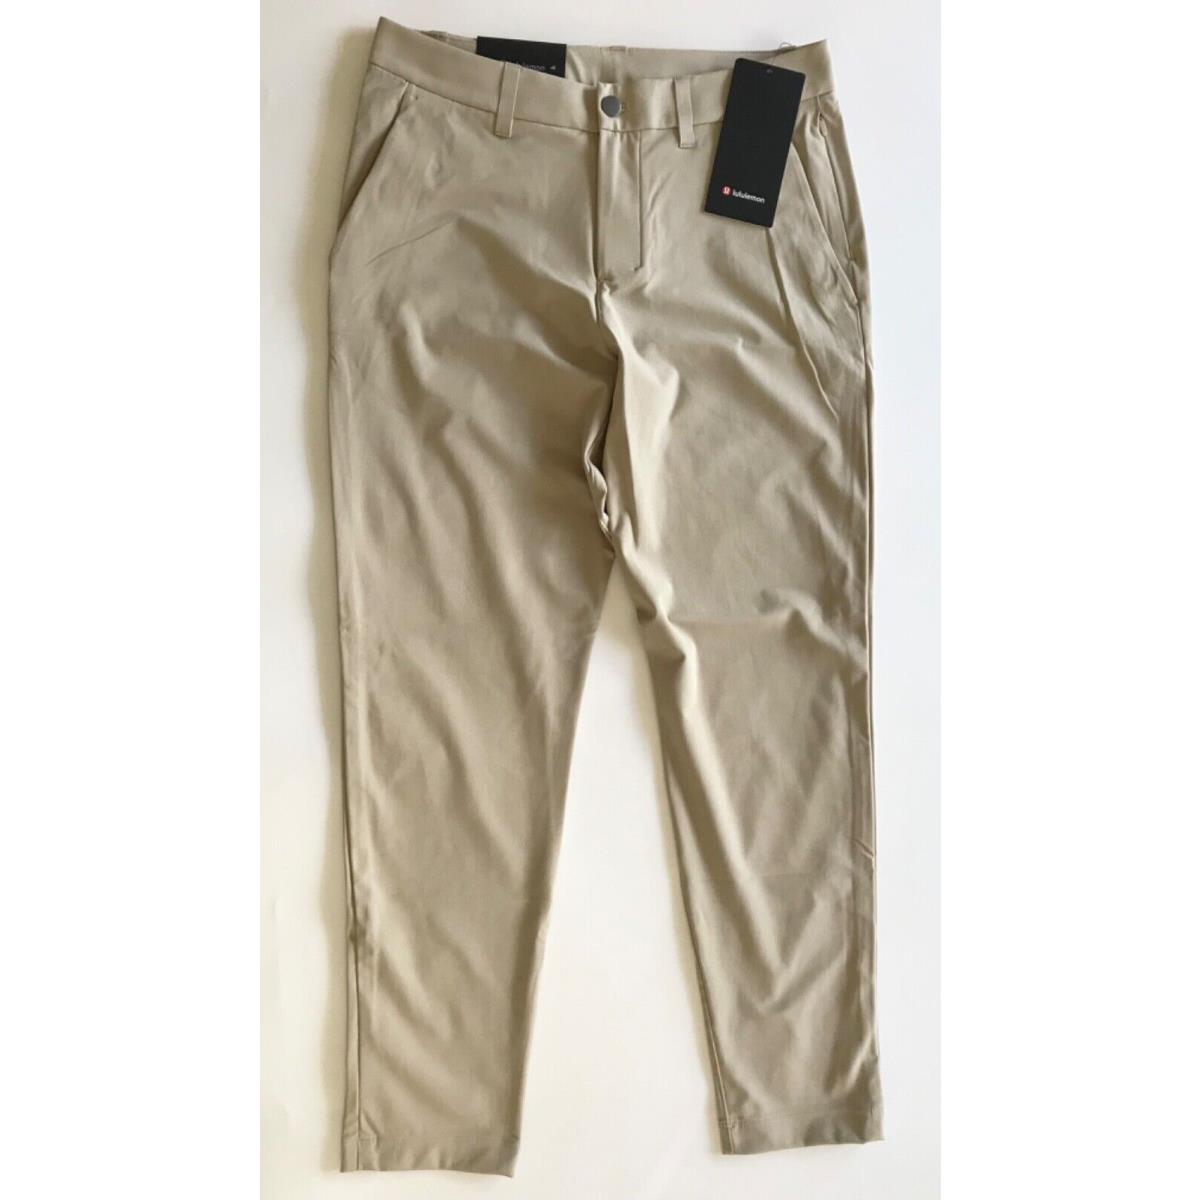 Lululemon Men s Abc Trouser Pant Slim Fit LM5AO4S Trnh Trench Size 30 x 32